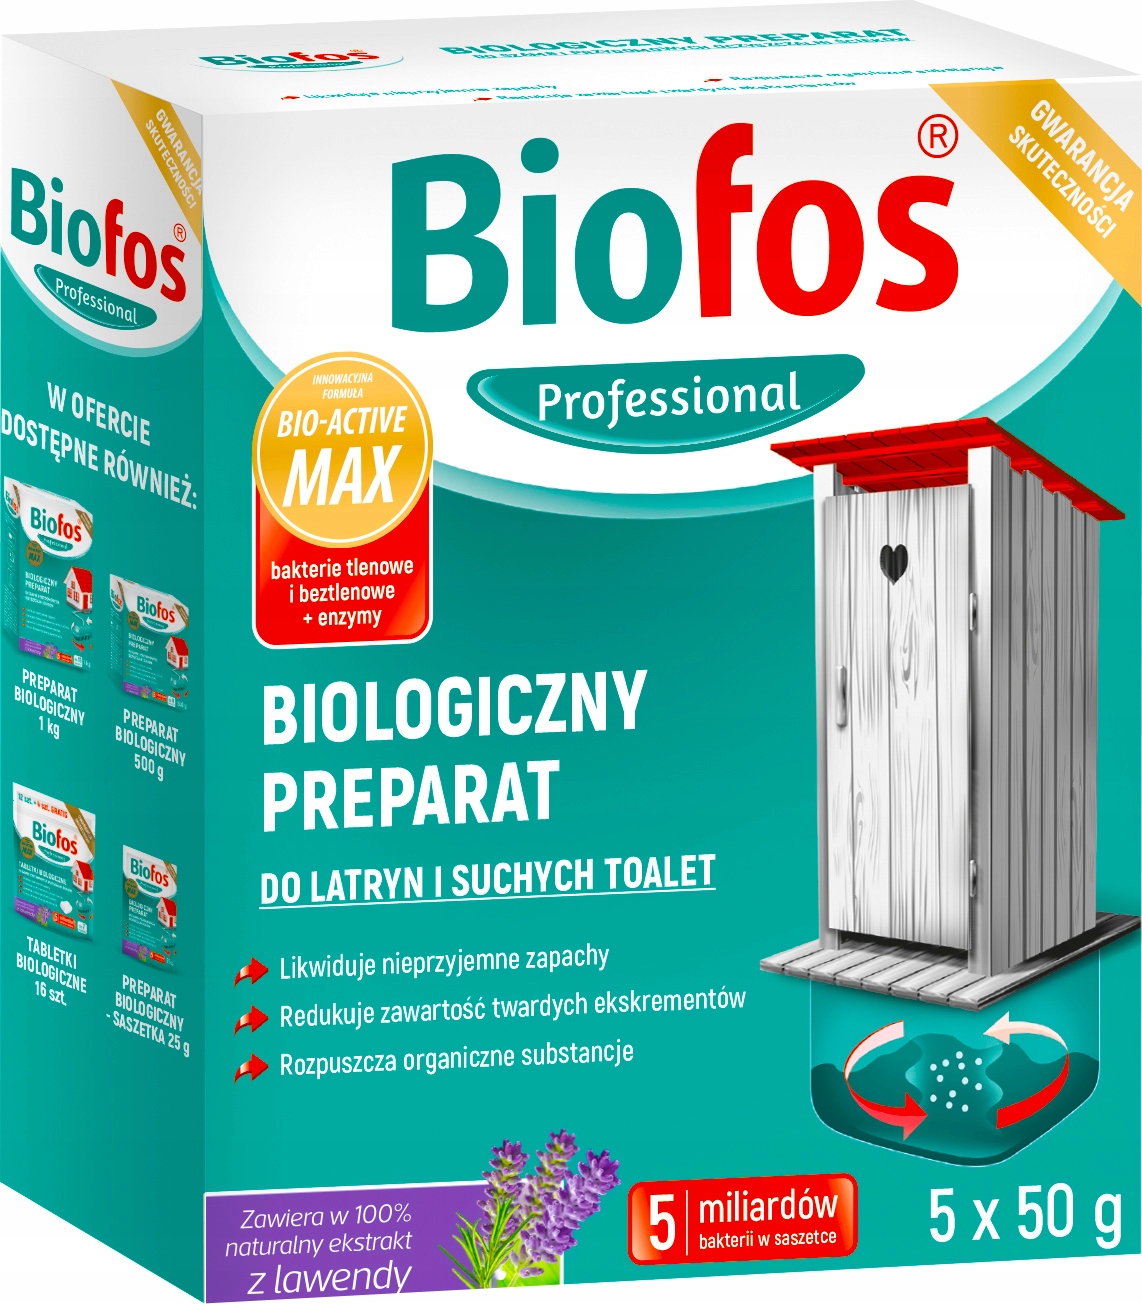 INCO Biofos preparat do latryn i suchych toalet 5x50g